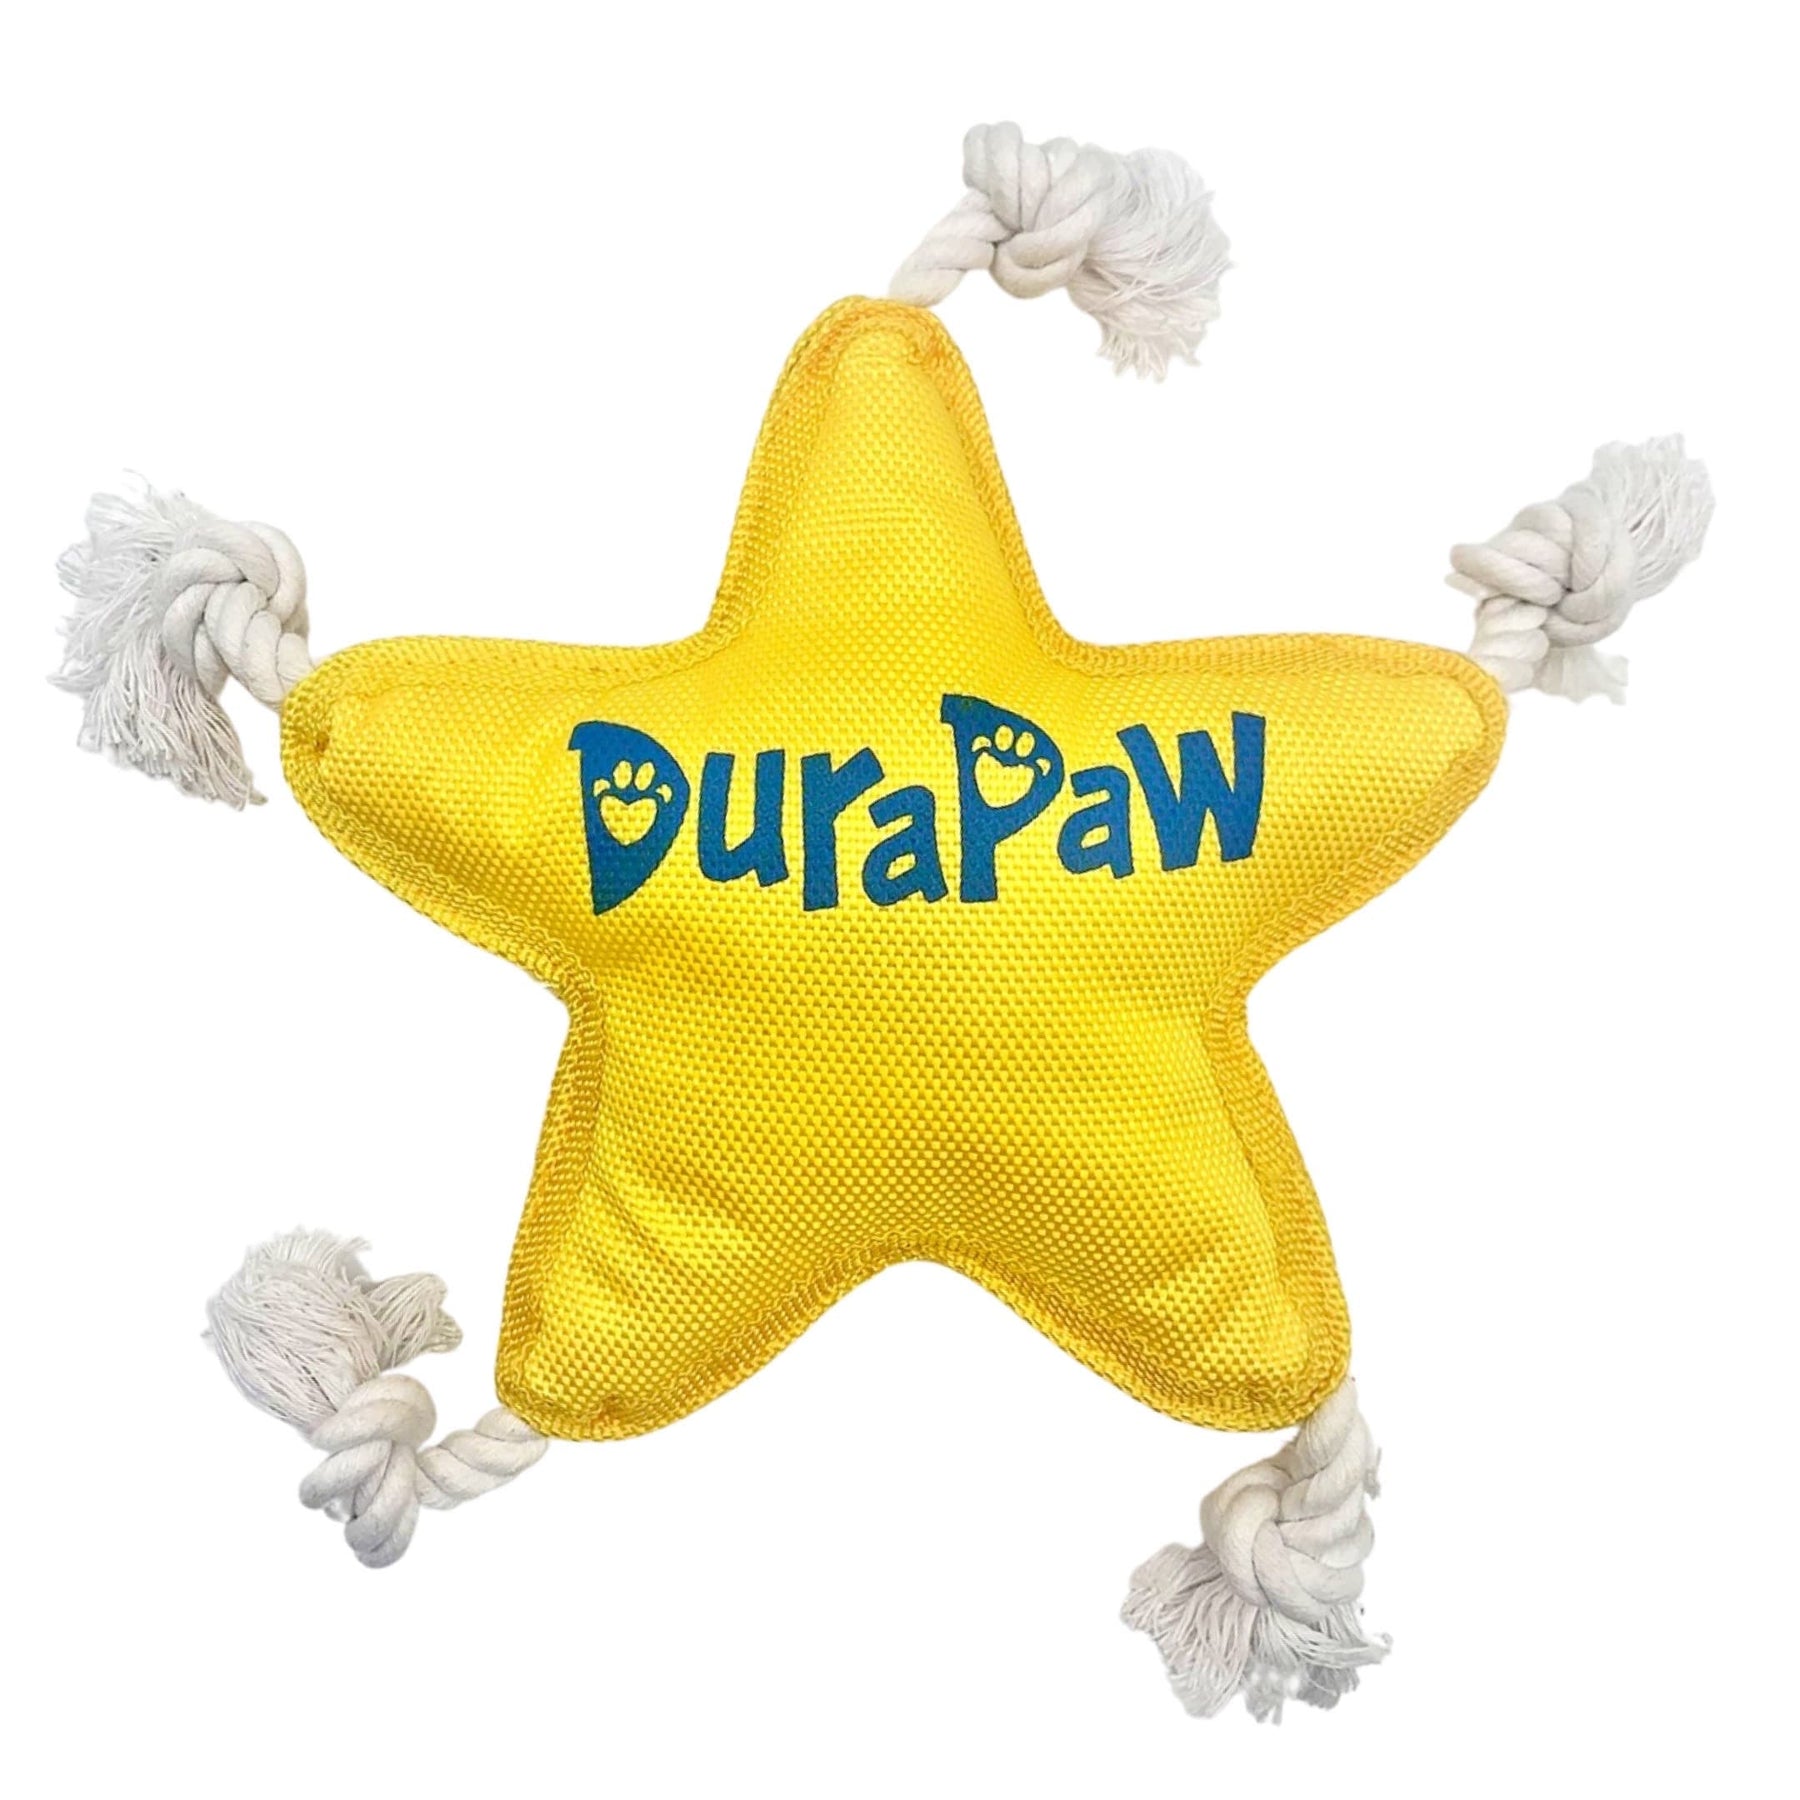 DuraPaw Yellow Star Shaped Plush Rope Tug Dog Toy